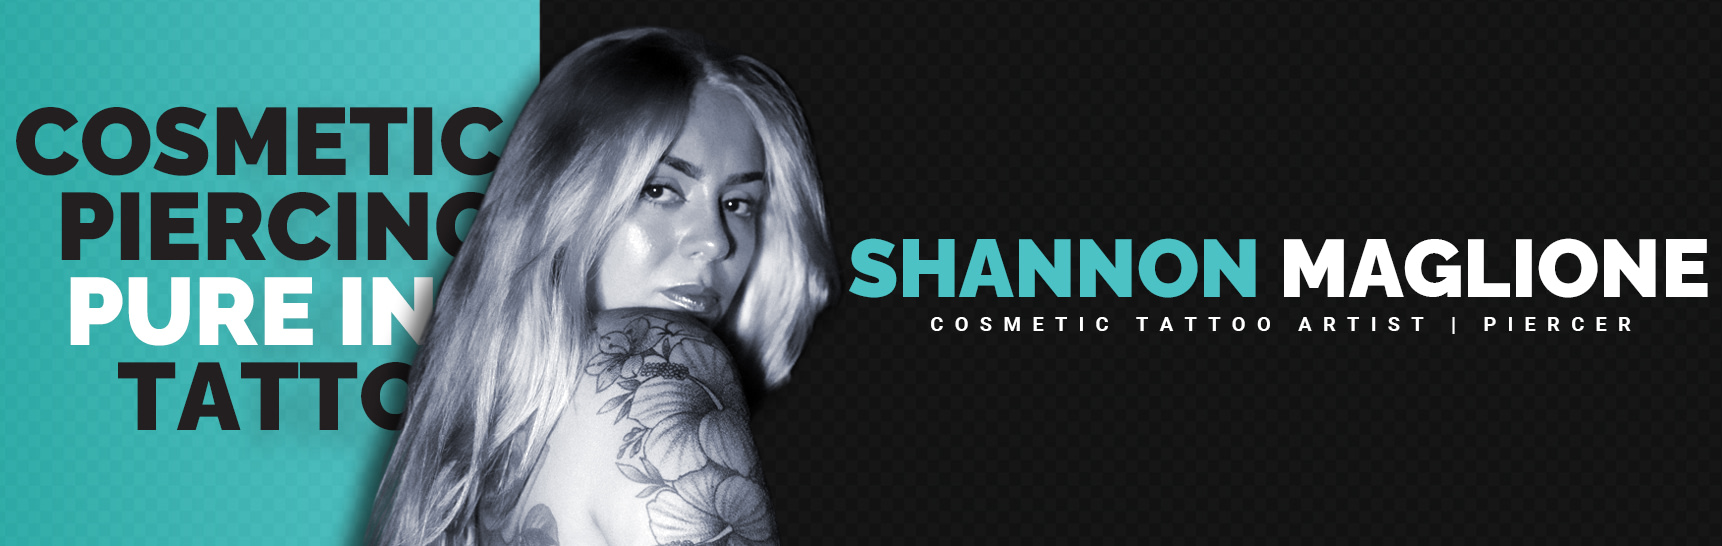 Shannon Maglione - Cosmetic Tattoo Artist - Piercer - Pure Ink Tattoo Studio NJ